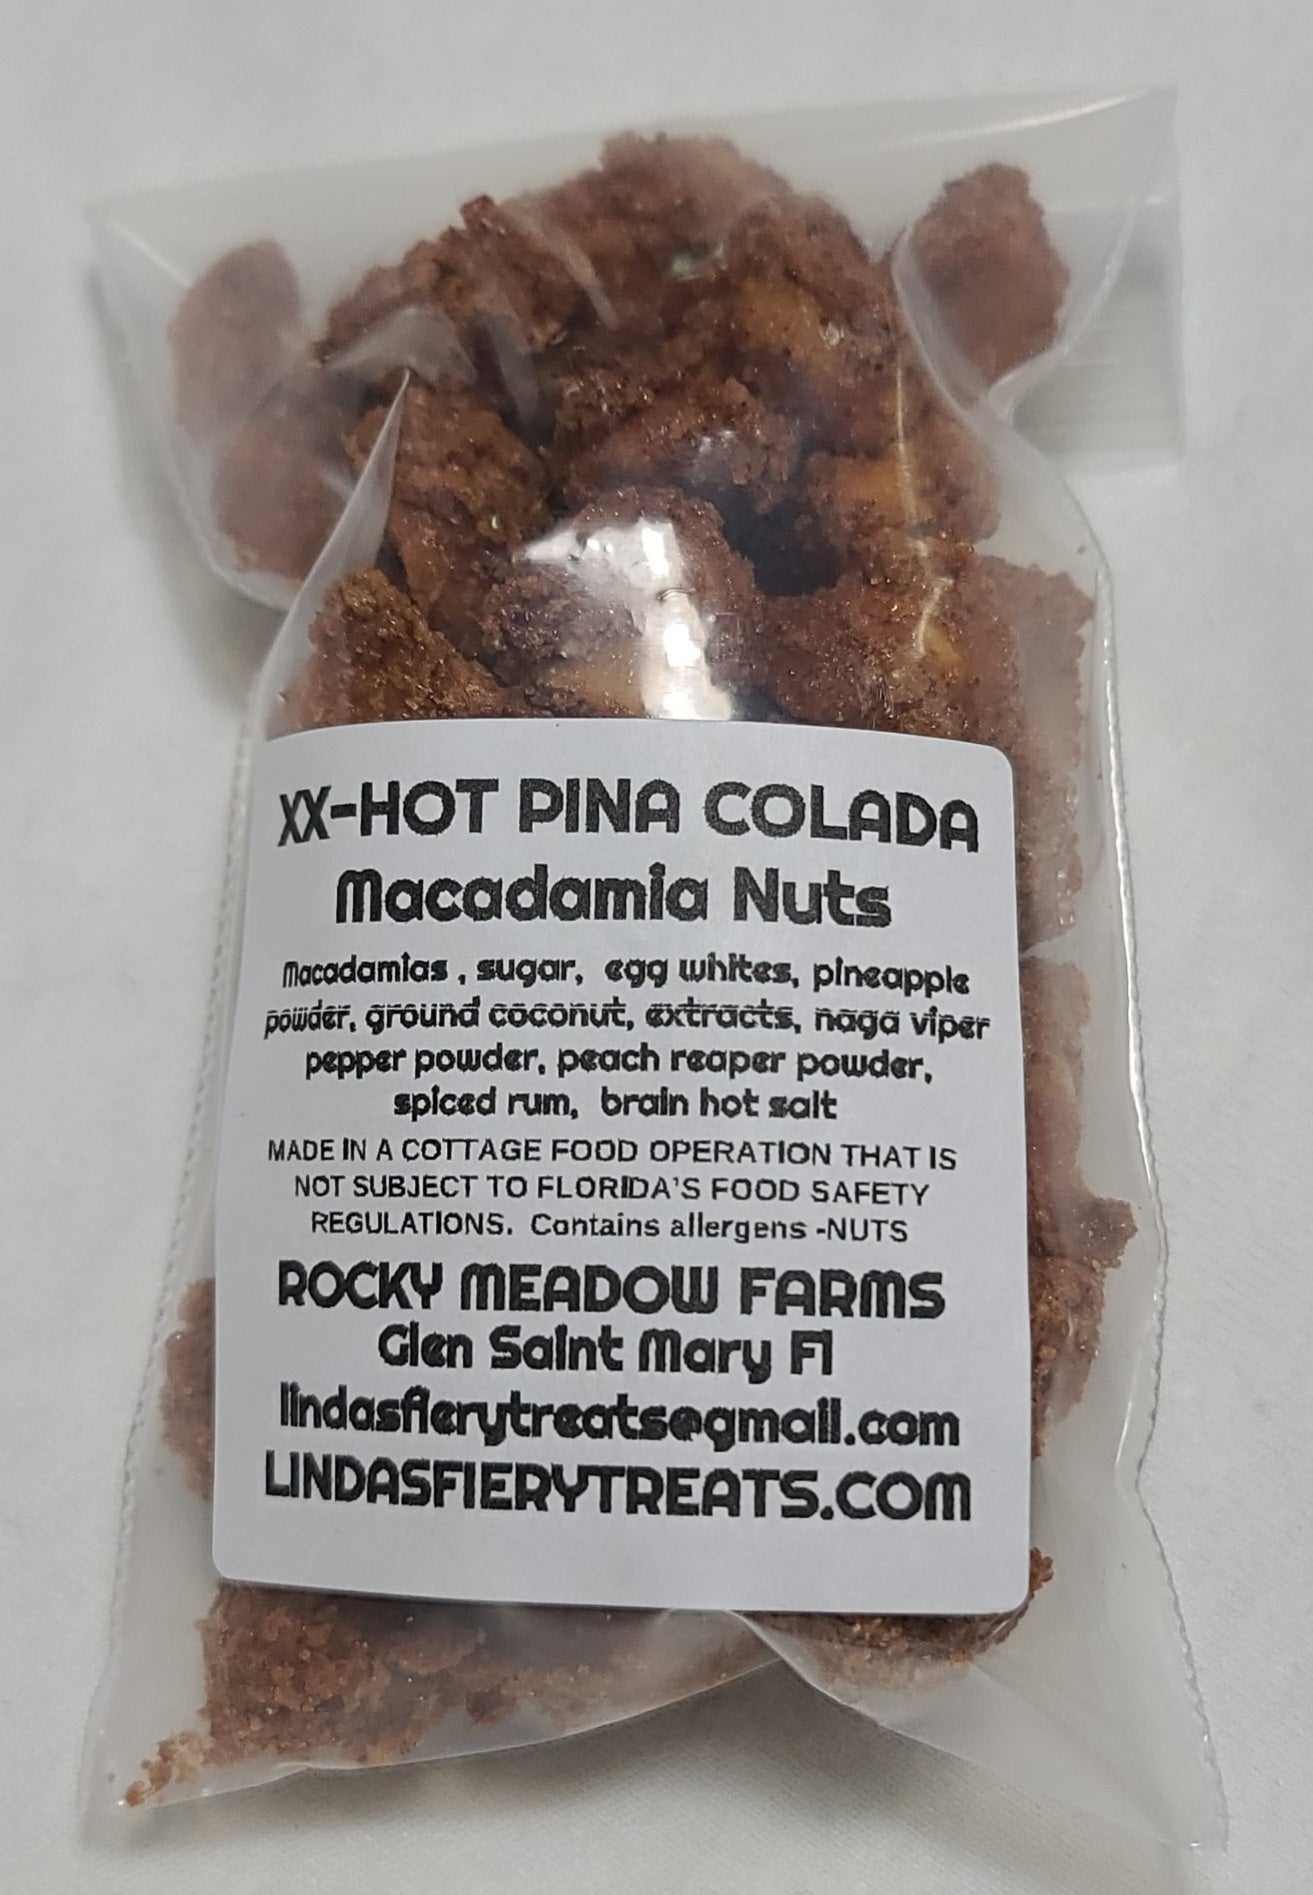 MACADAMIANS - XX-Hot Pina colada Macadamia nuts